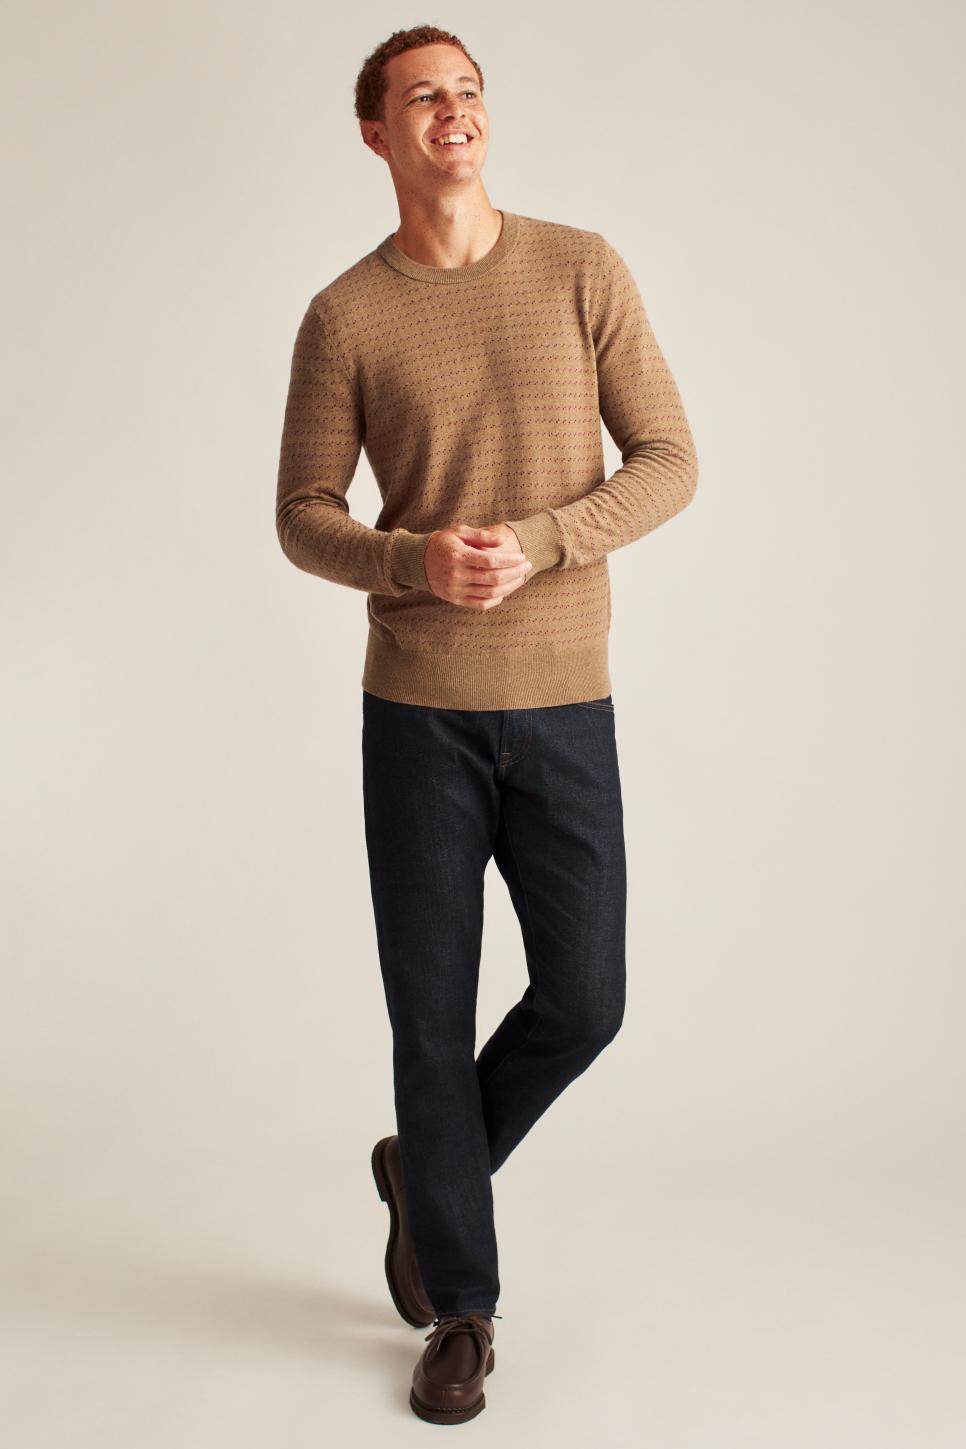 rx-bonobosbonobos-mens-limited-edition-sweater.jpeg